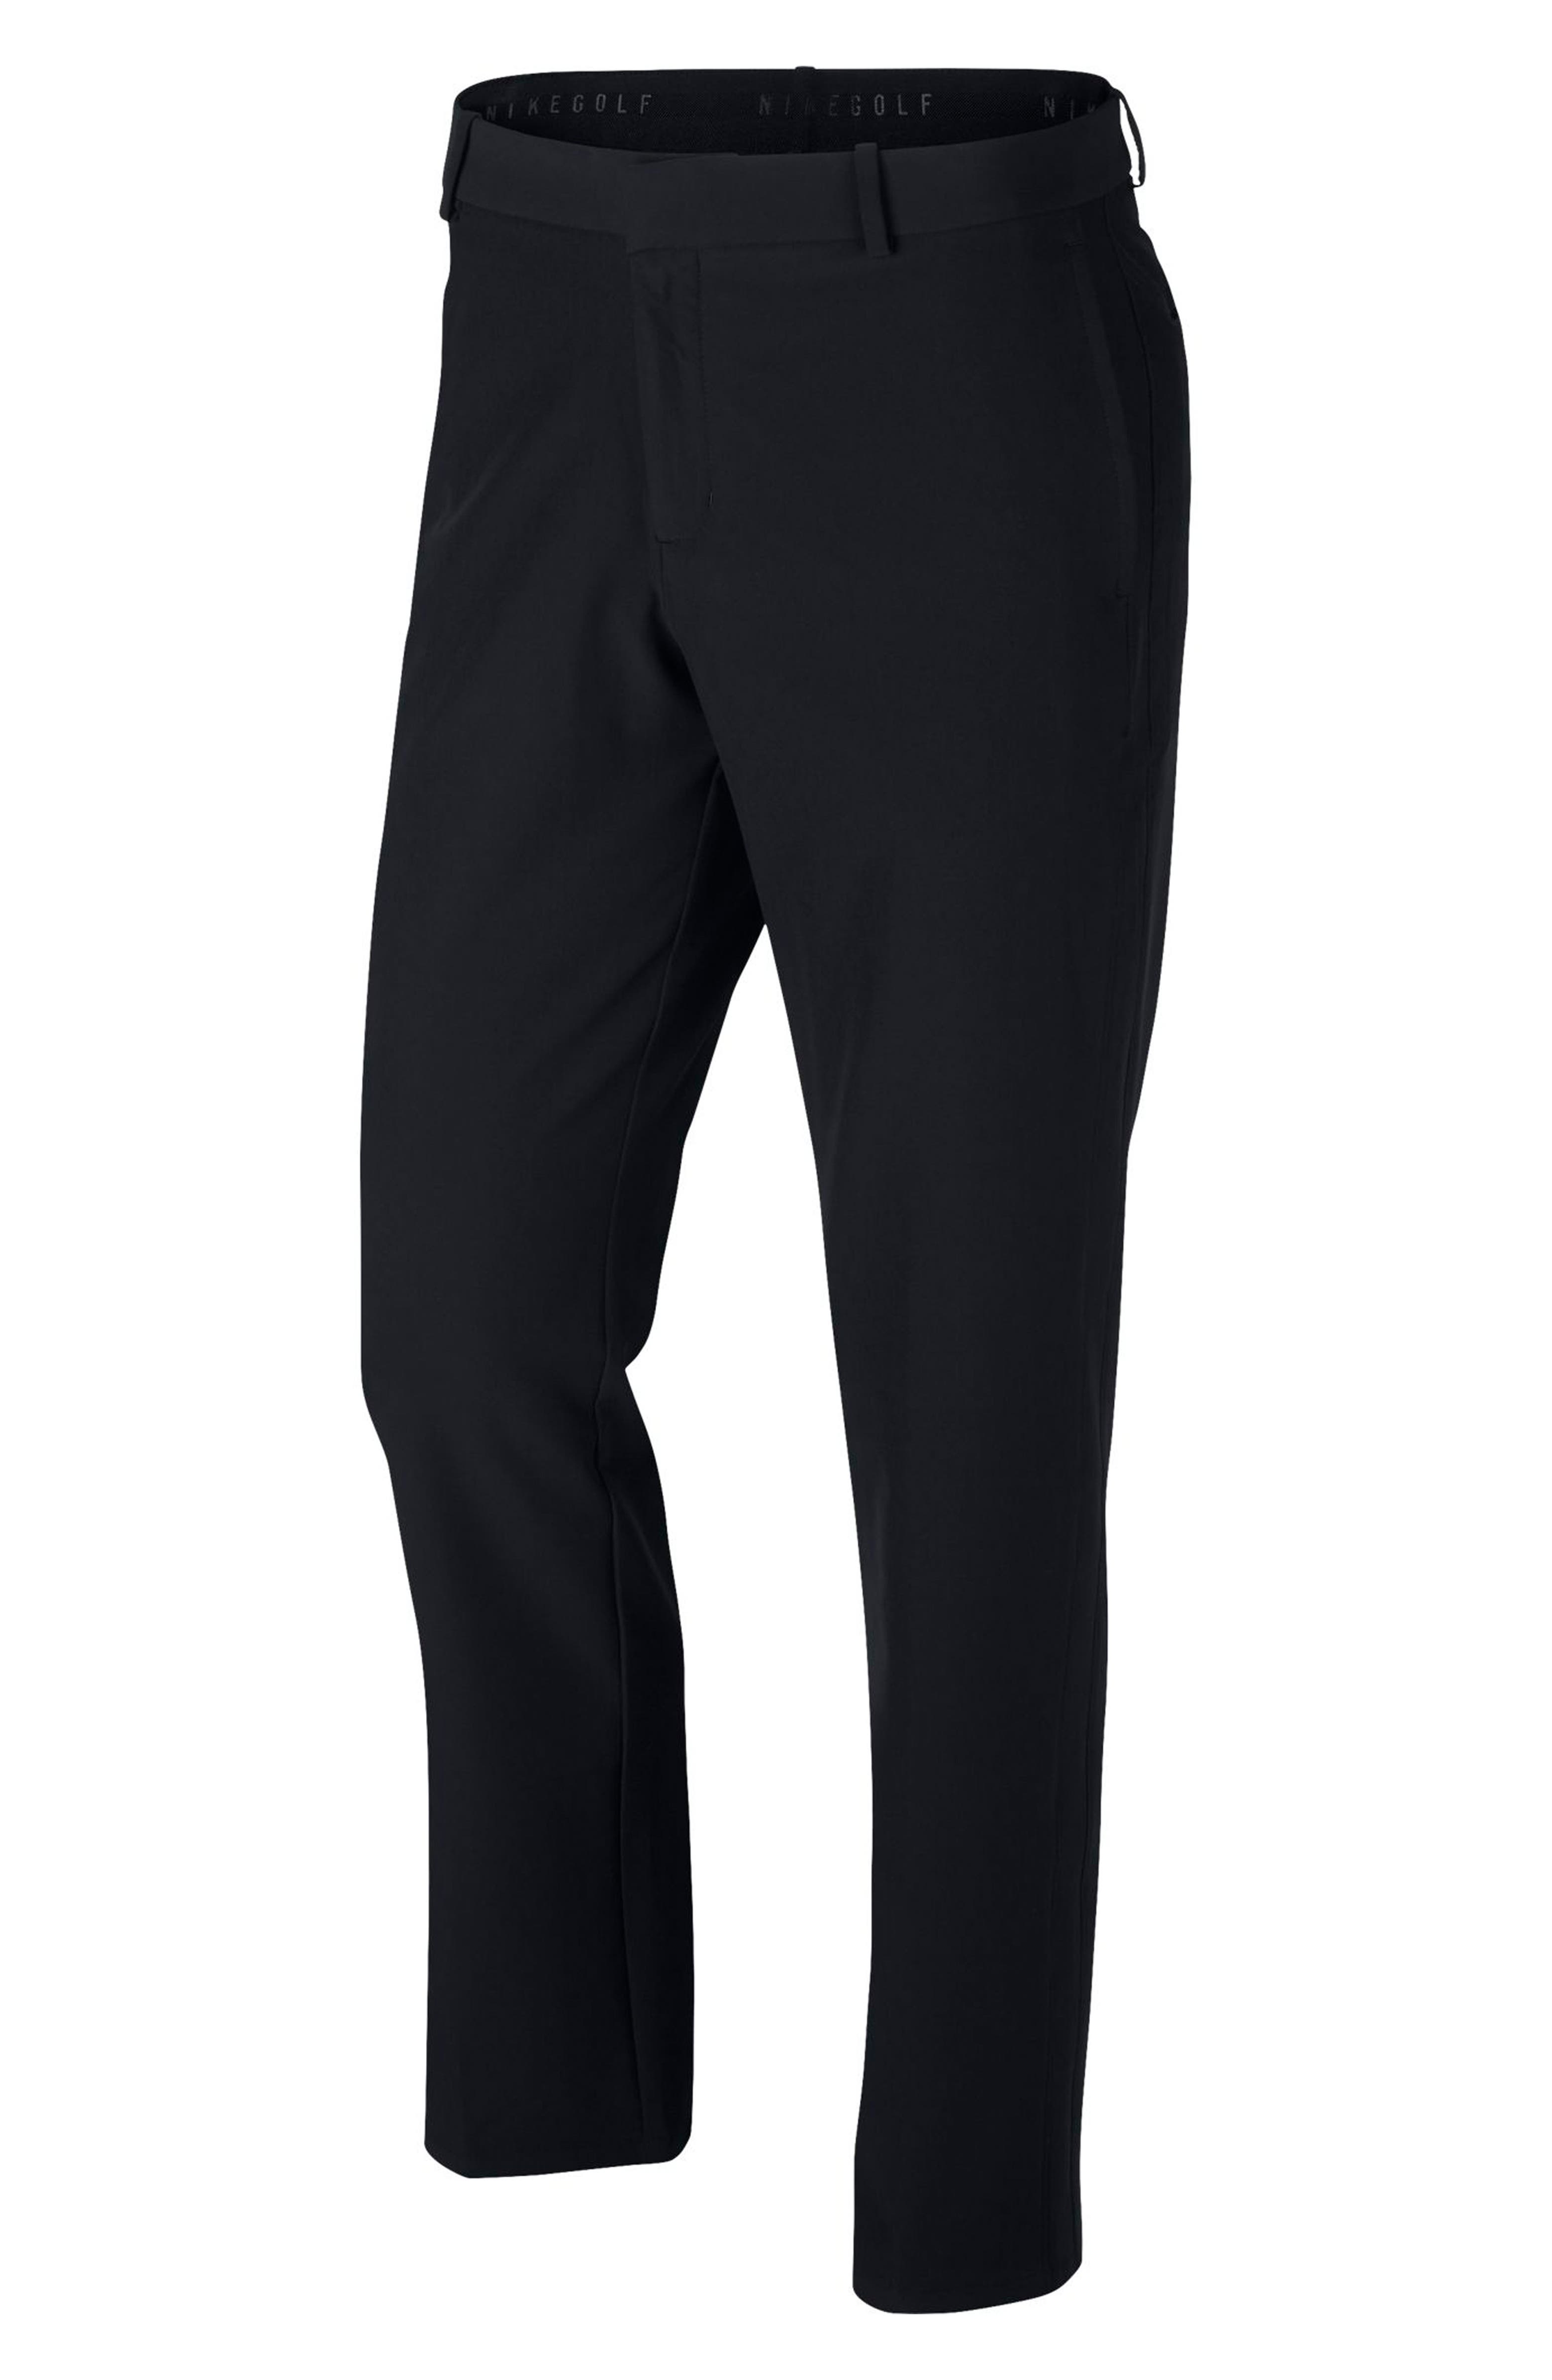 Nike Flex Slim Fit Hybrid Golf Pants | Nordstrom